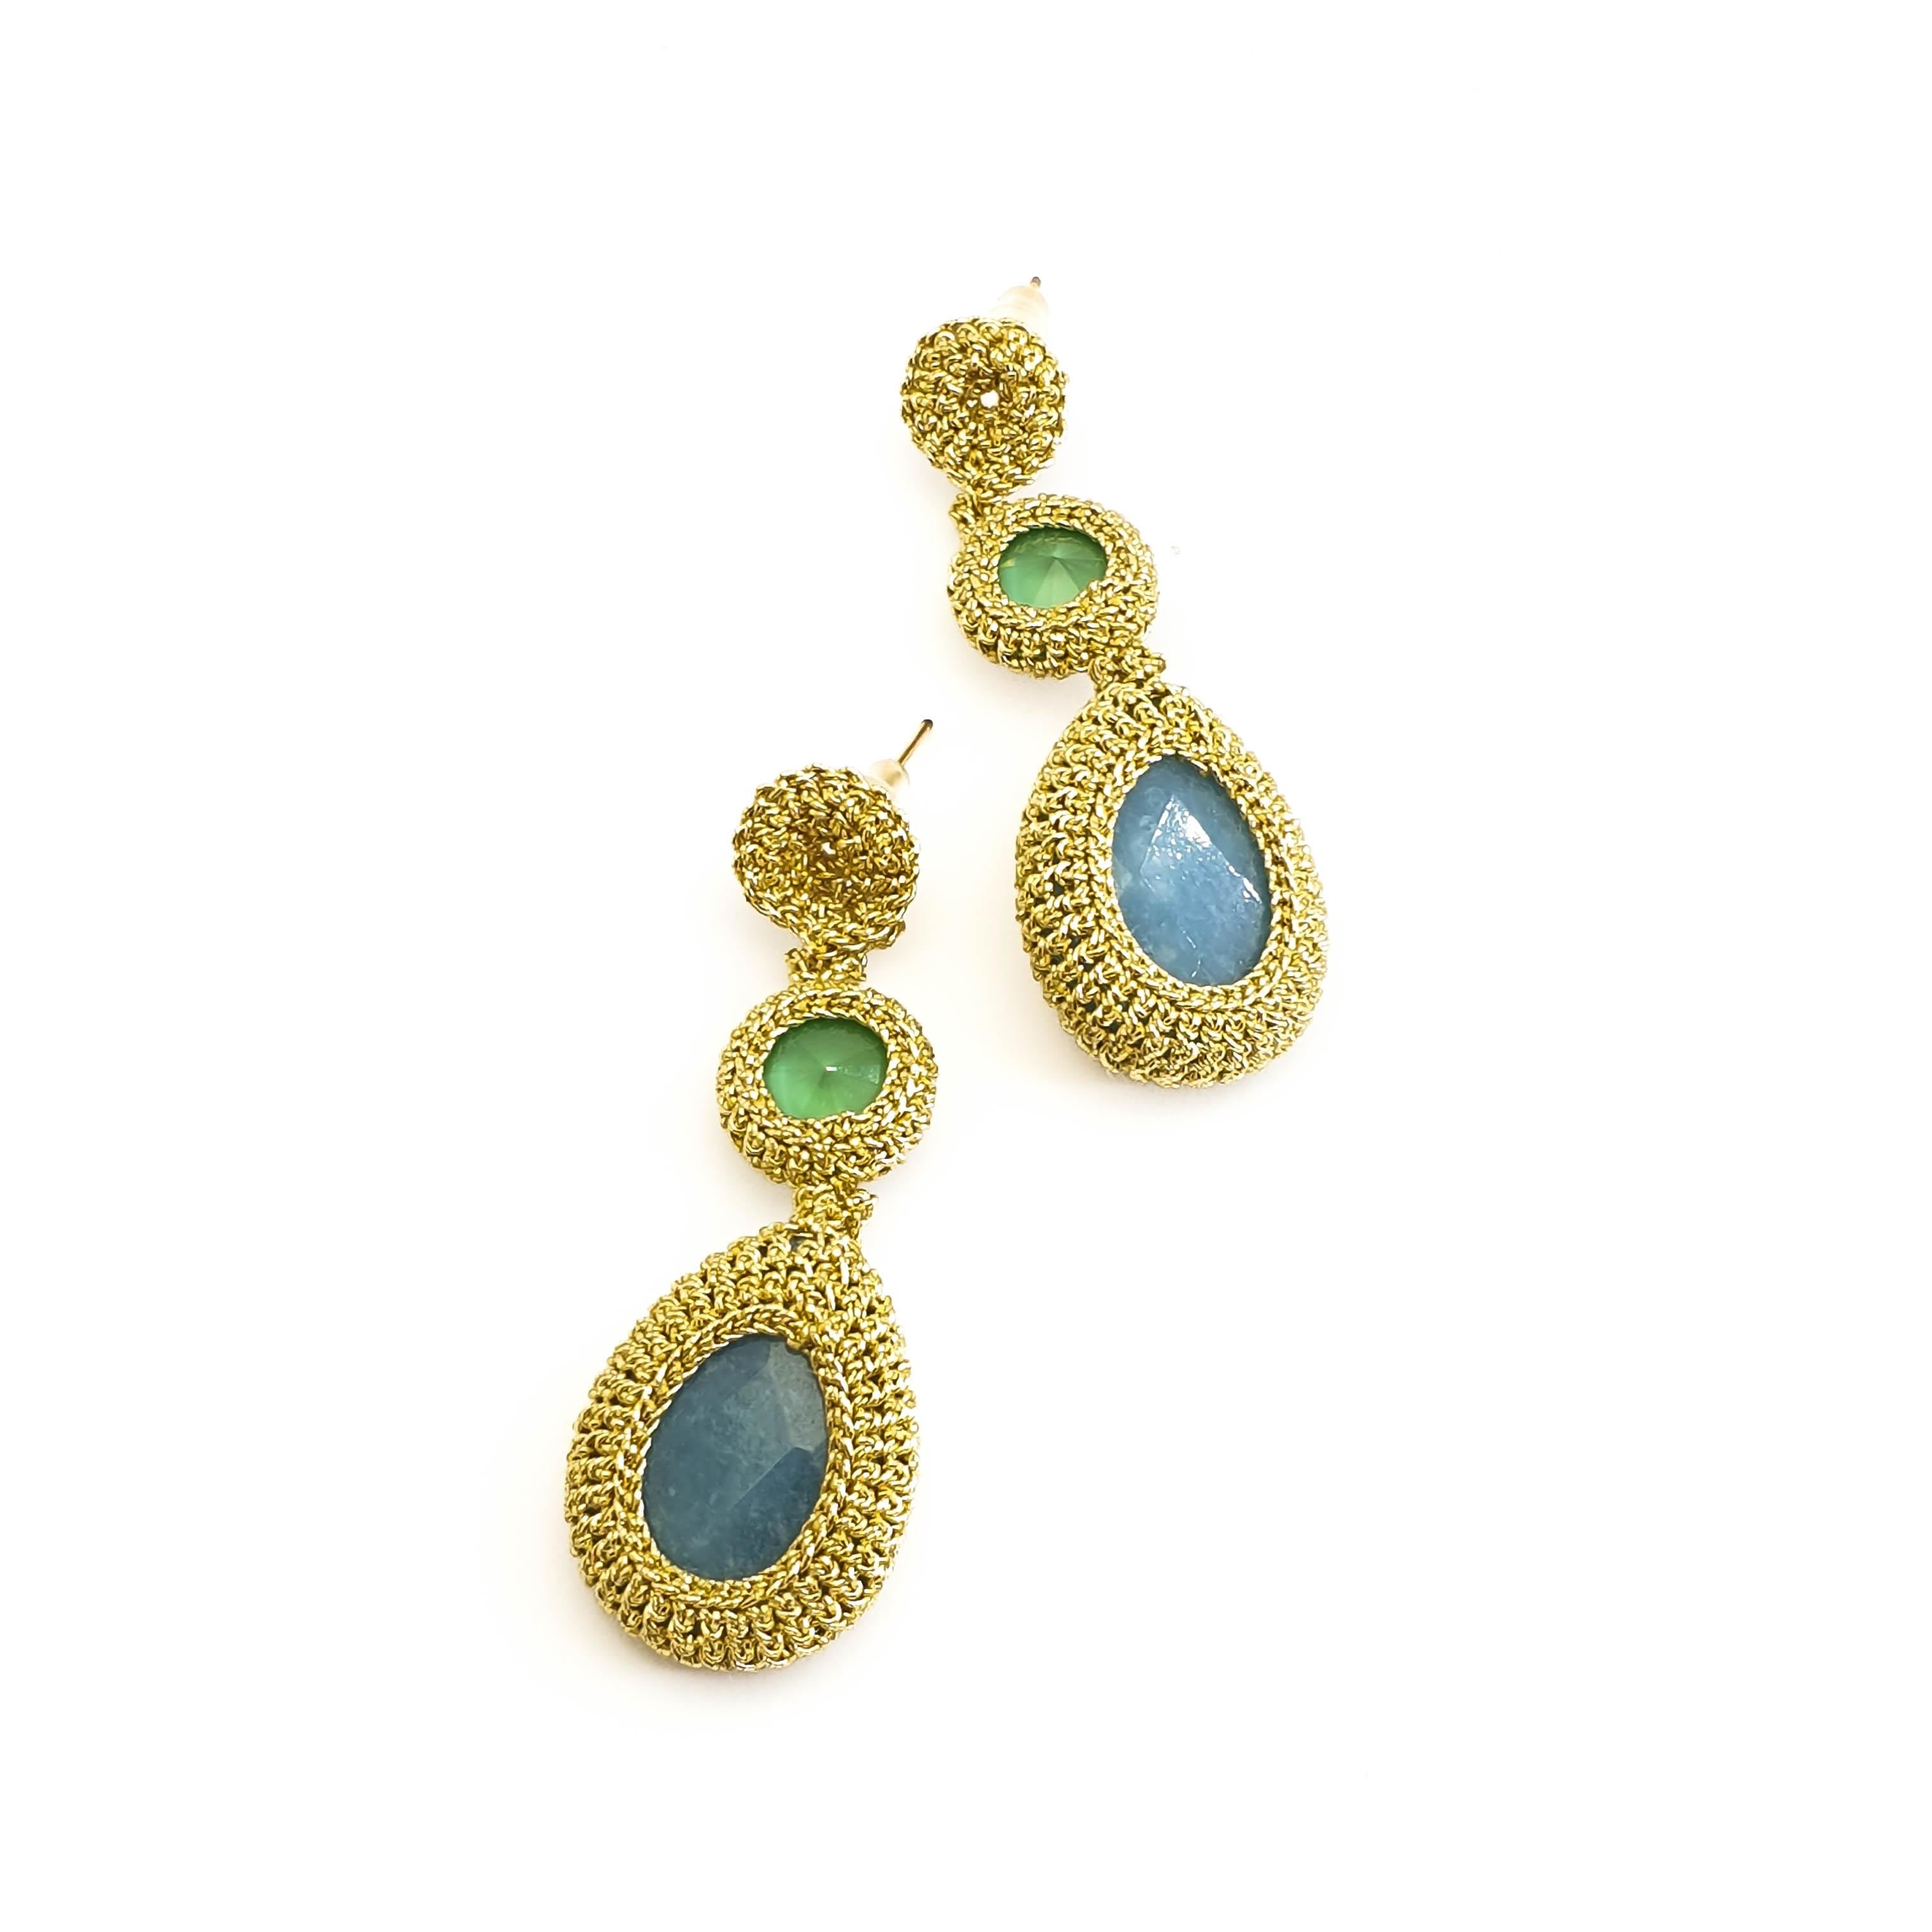 Gold Drop Earrings Contemporary Jade Swarovski Crystals Fashion Handmade Crochet In New Condition For Sale In Kfar Saba, IL